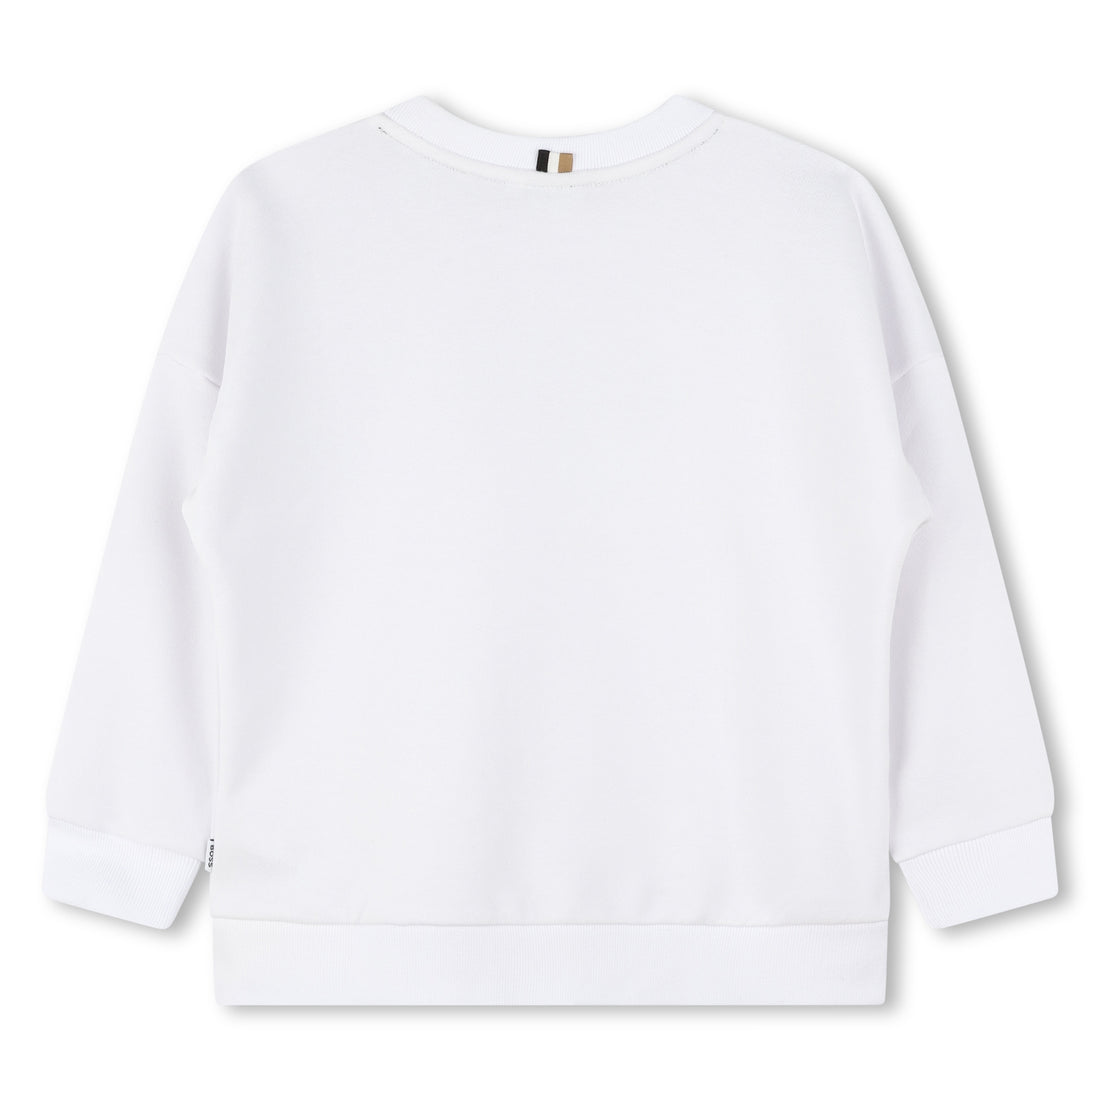 Hugo Boss Sweatshirt Style: J25Q16